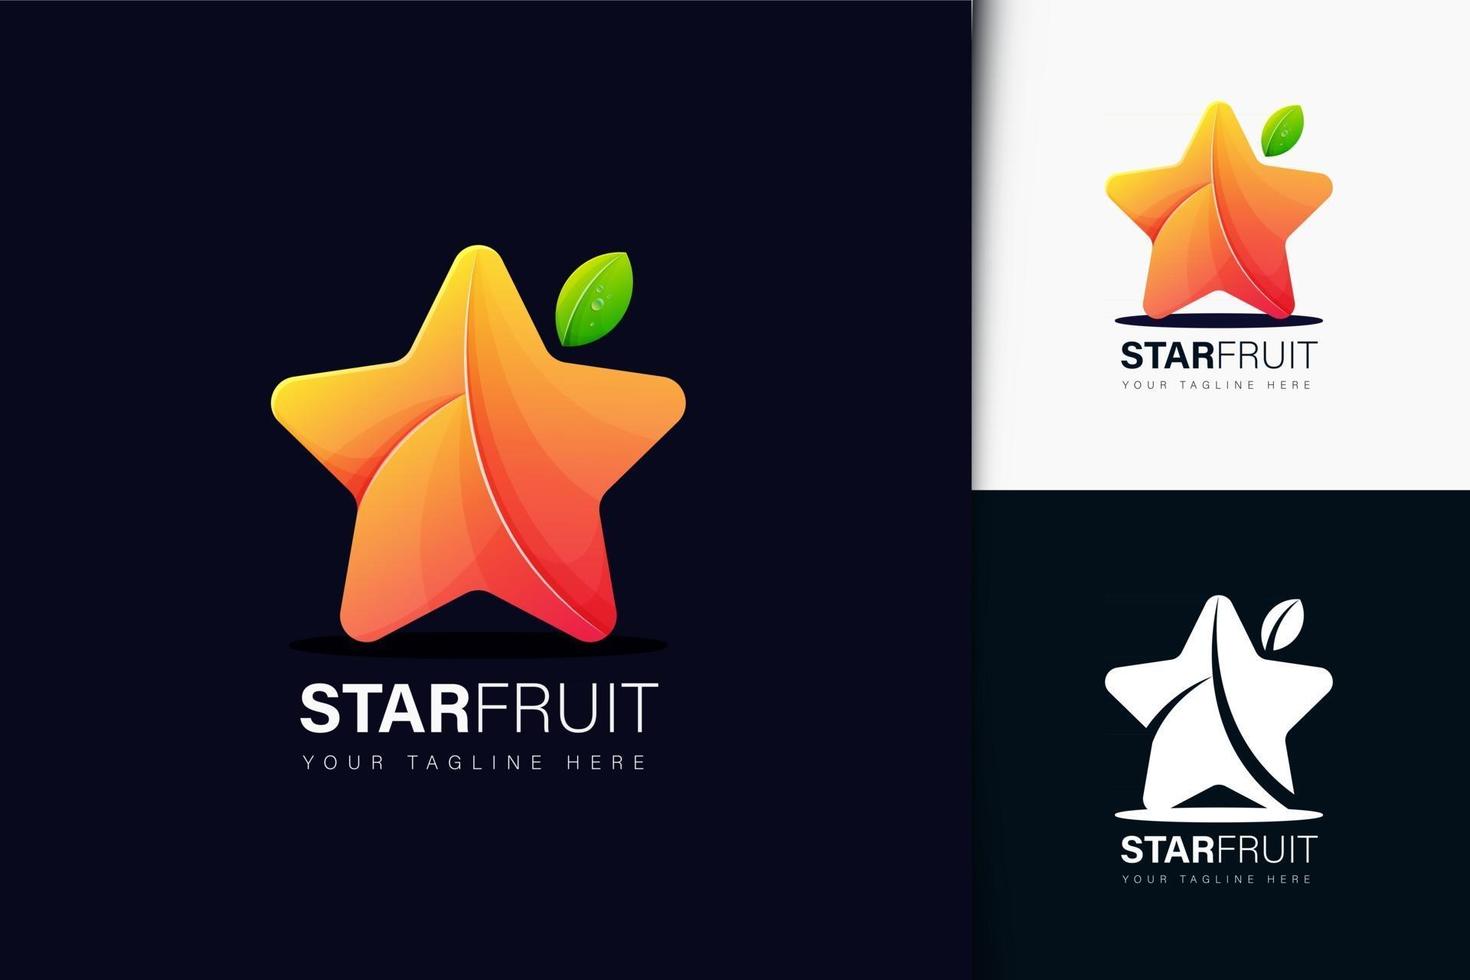 Star fruit logo design with gradient vector